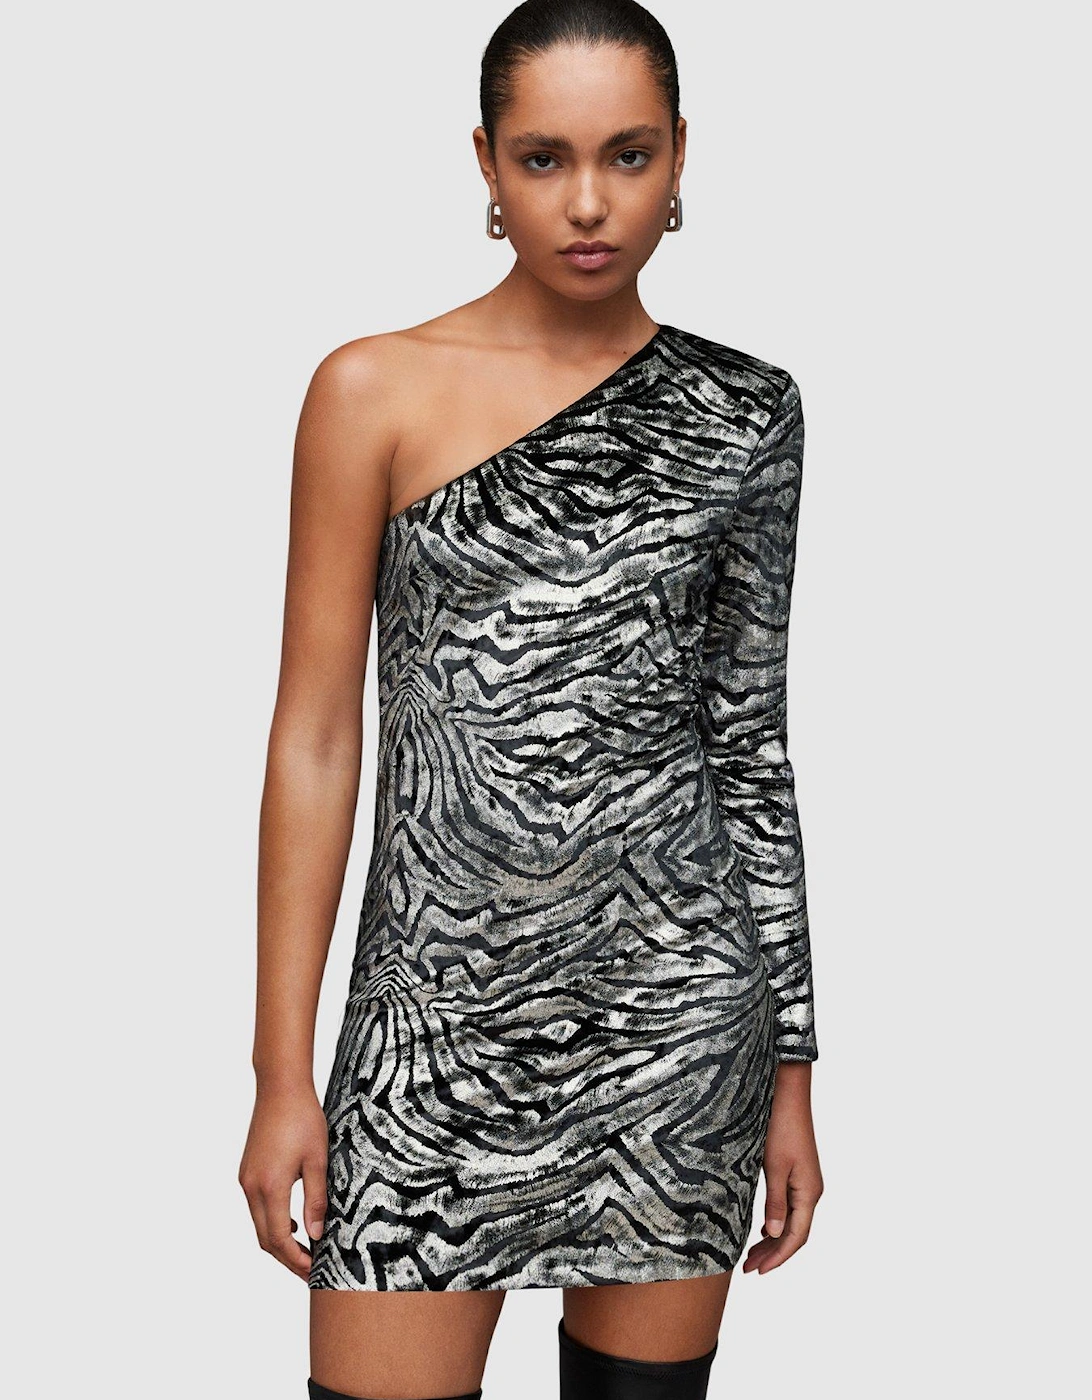 Deri Zebra Dress - Black/Silver, 7 of 6